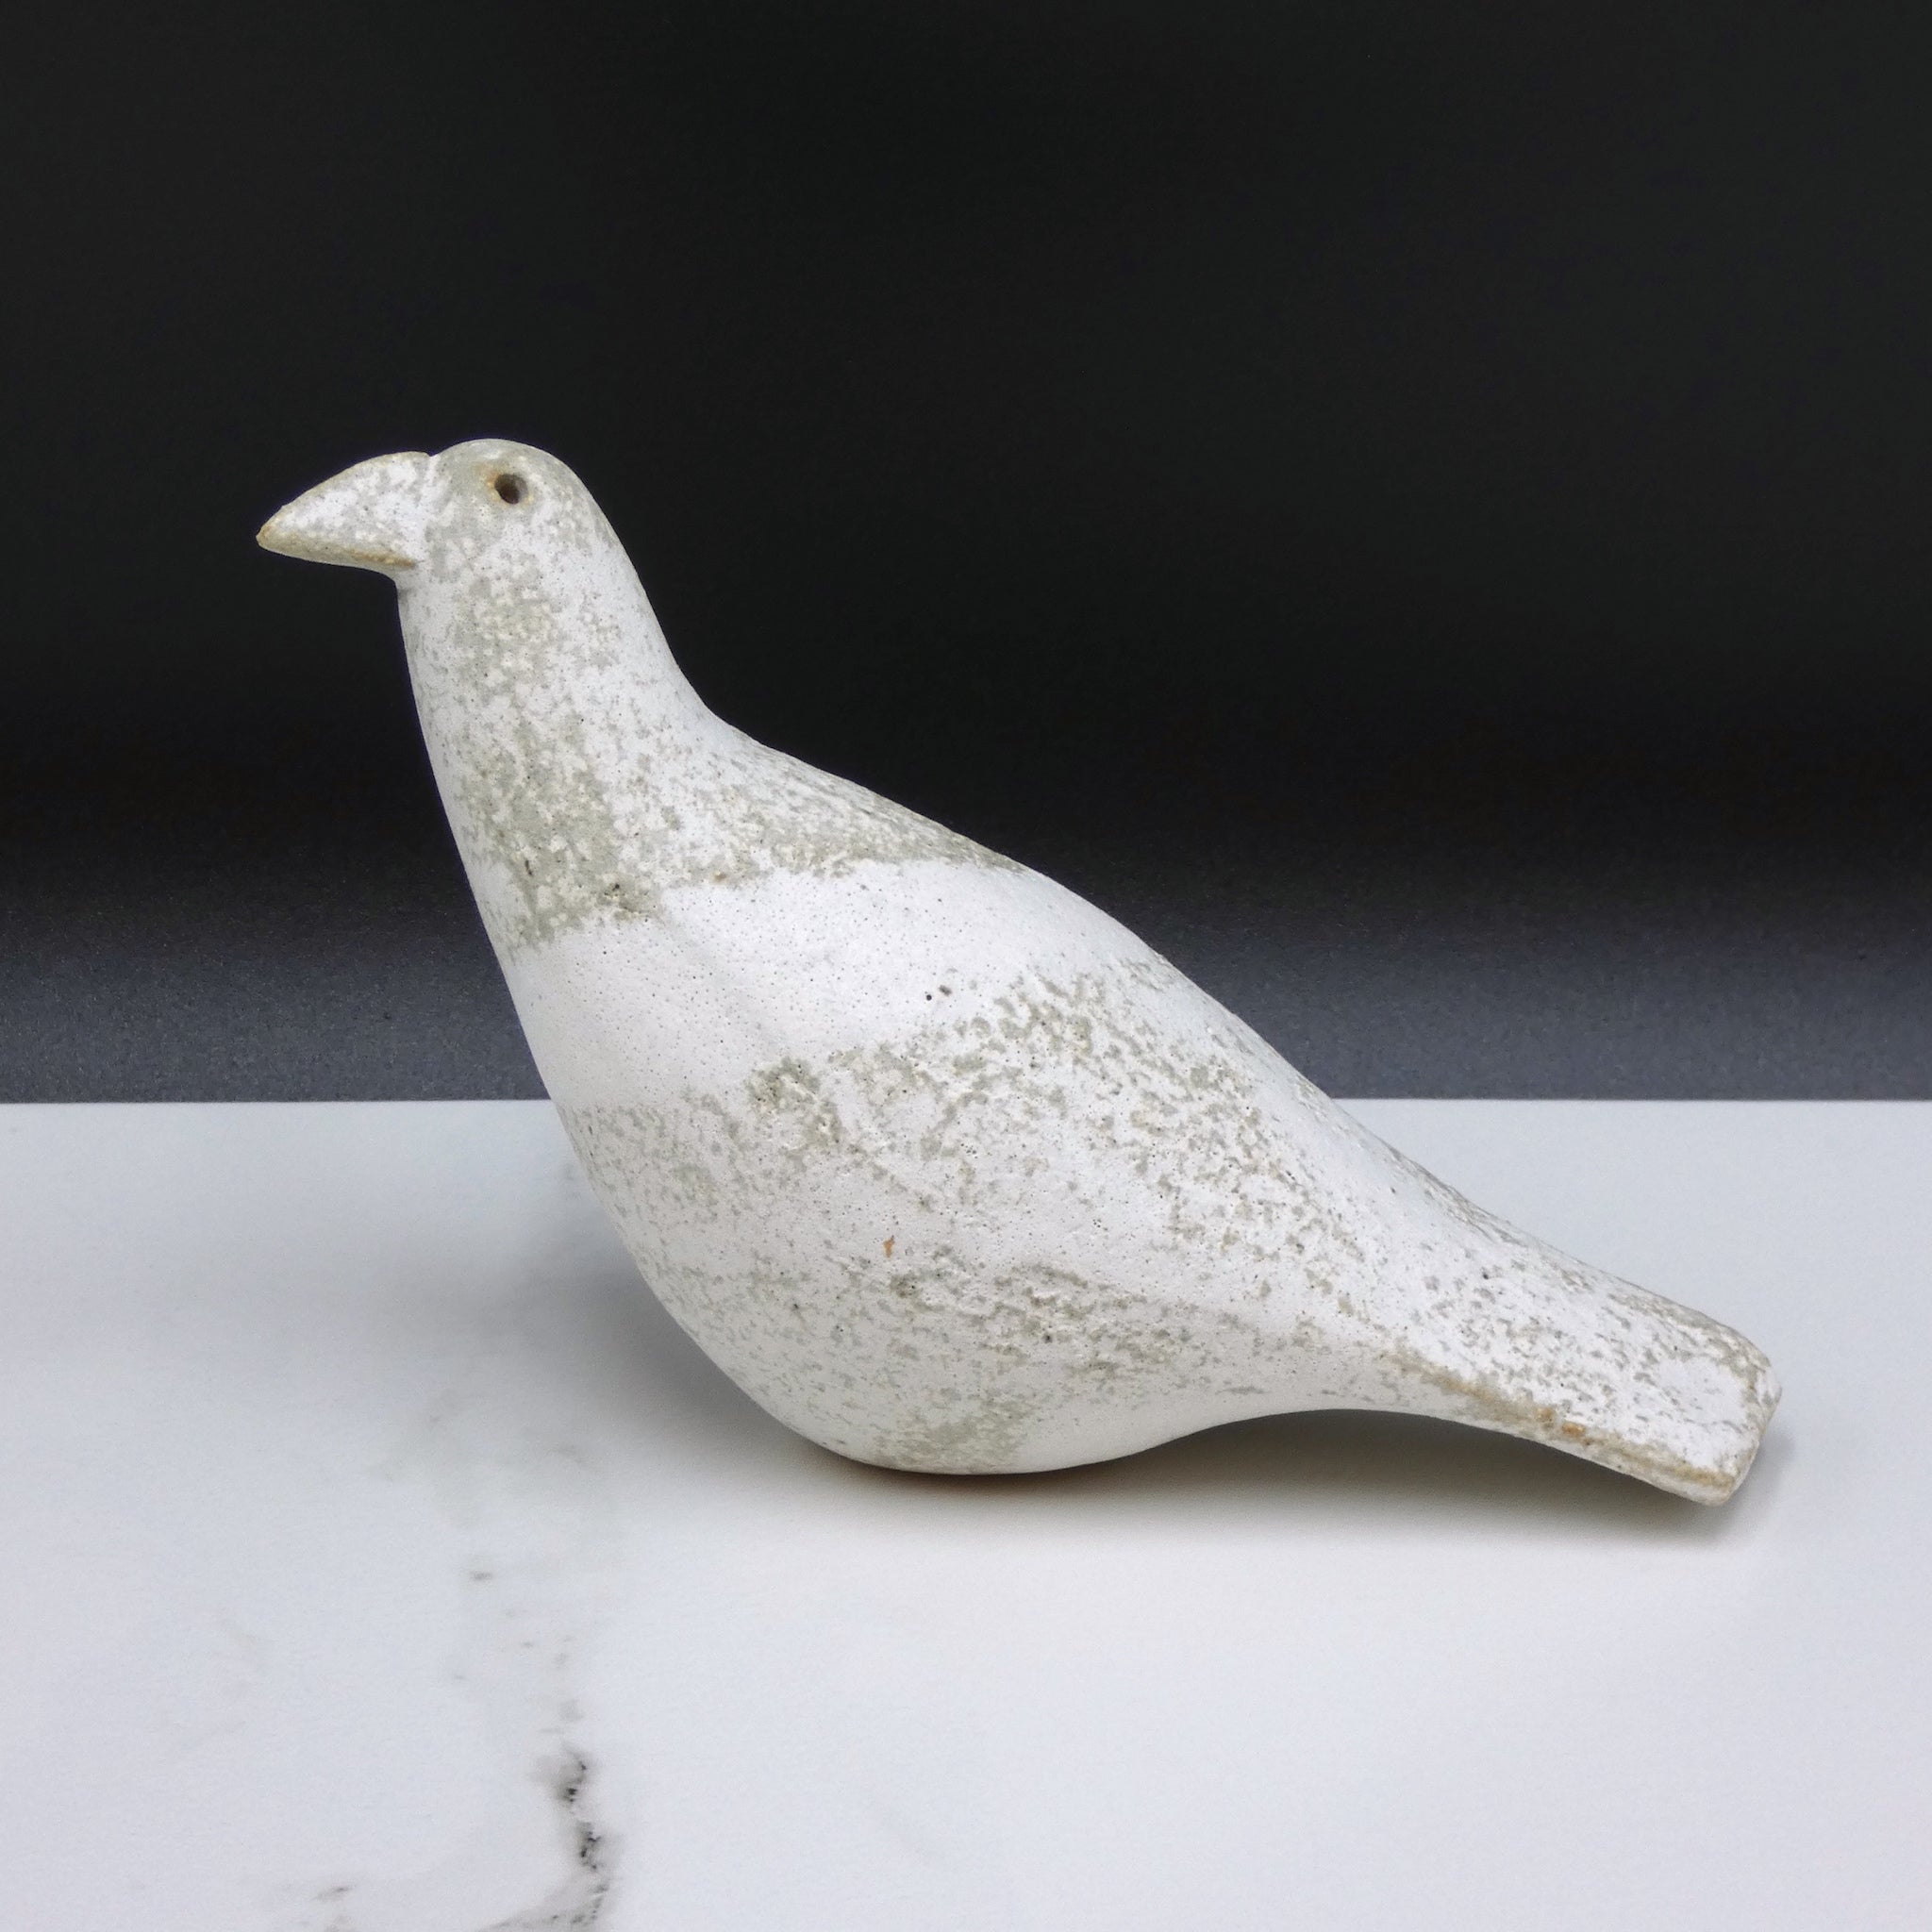 Small Snow Bird by artist Jane Muir